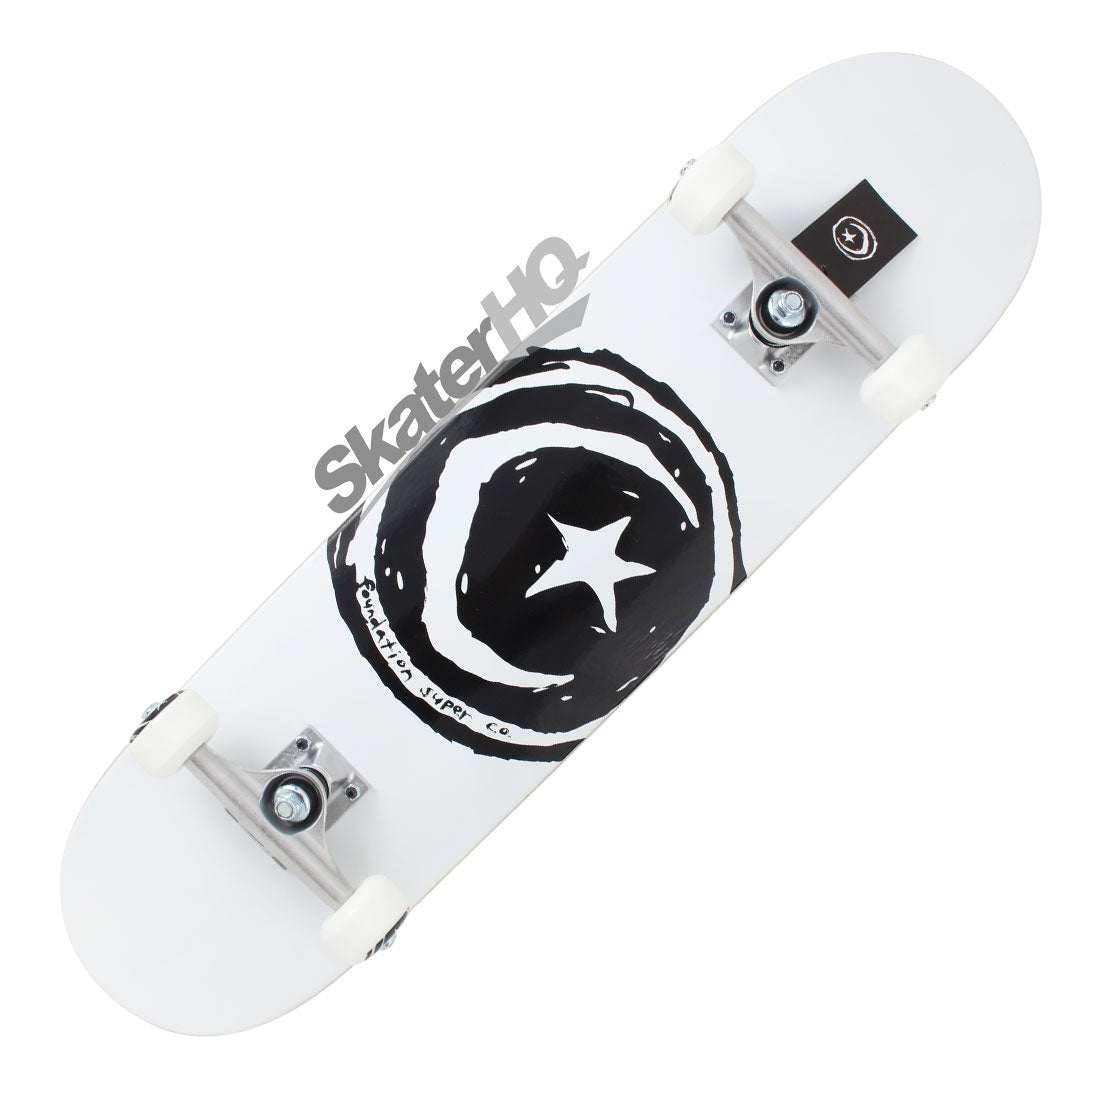 Foundation Star & Moon 7.75 Complete - White Skateboard Completes Modern Street